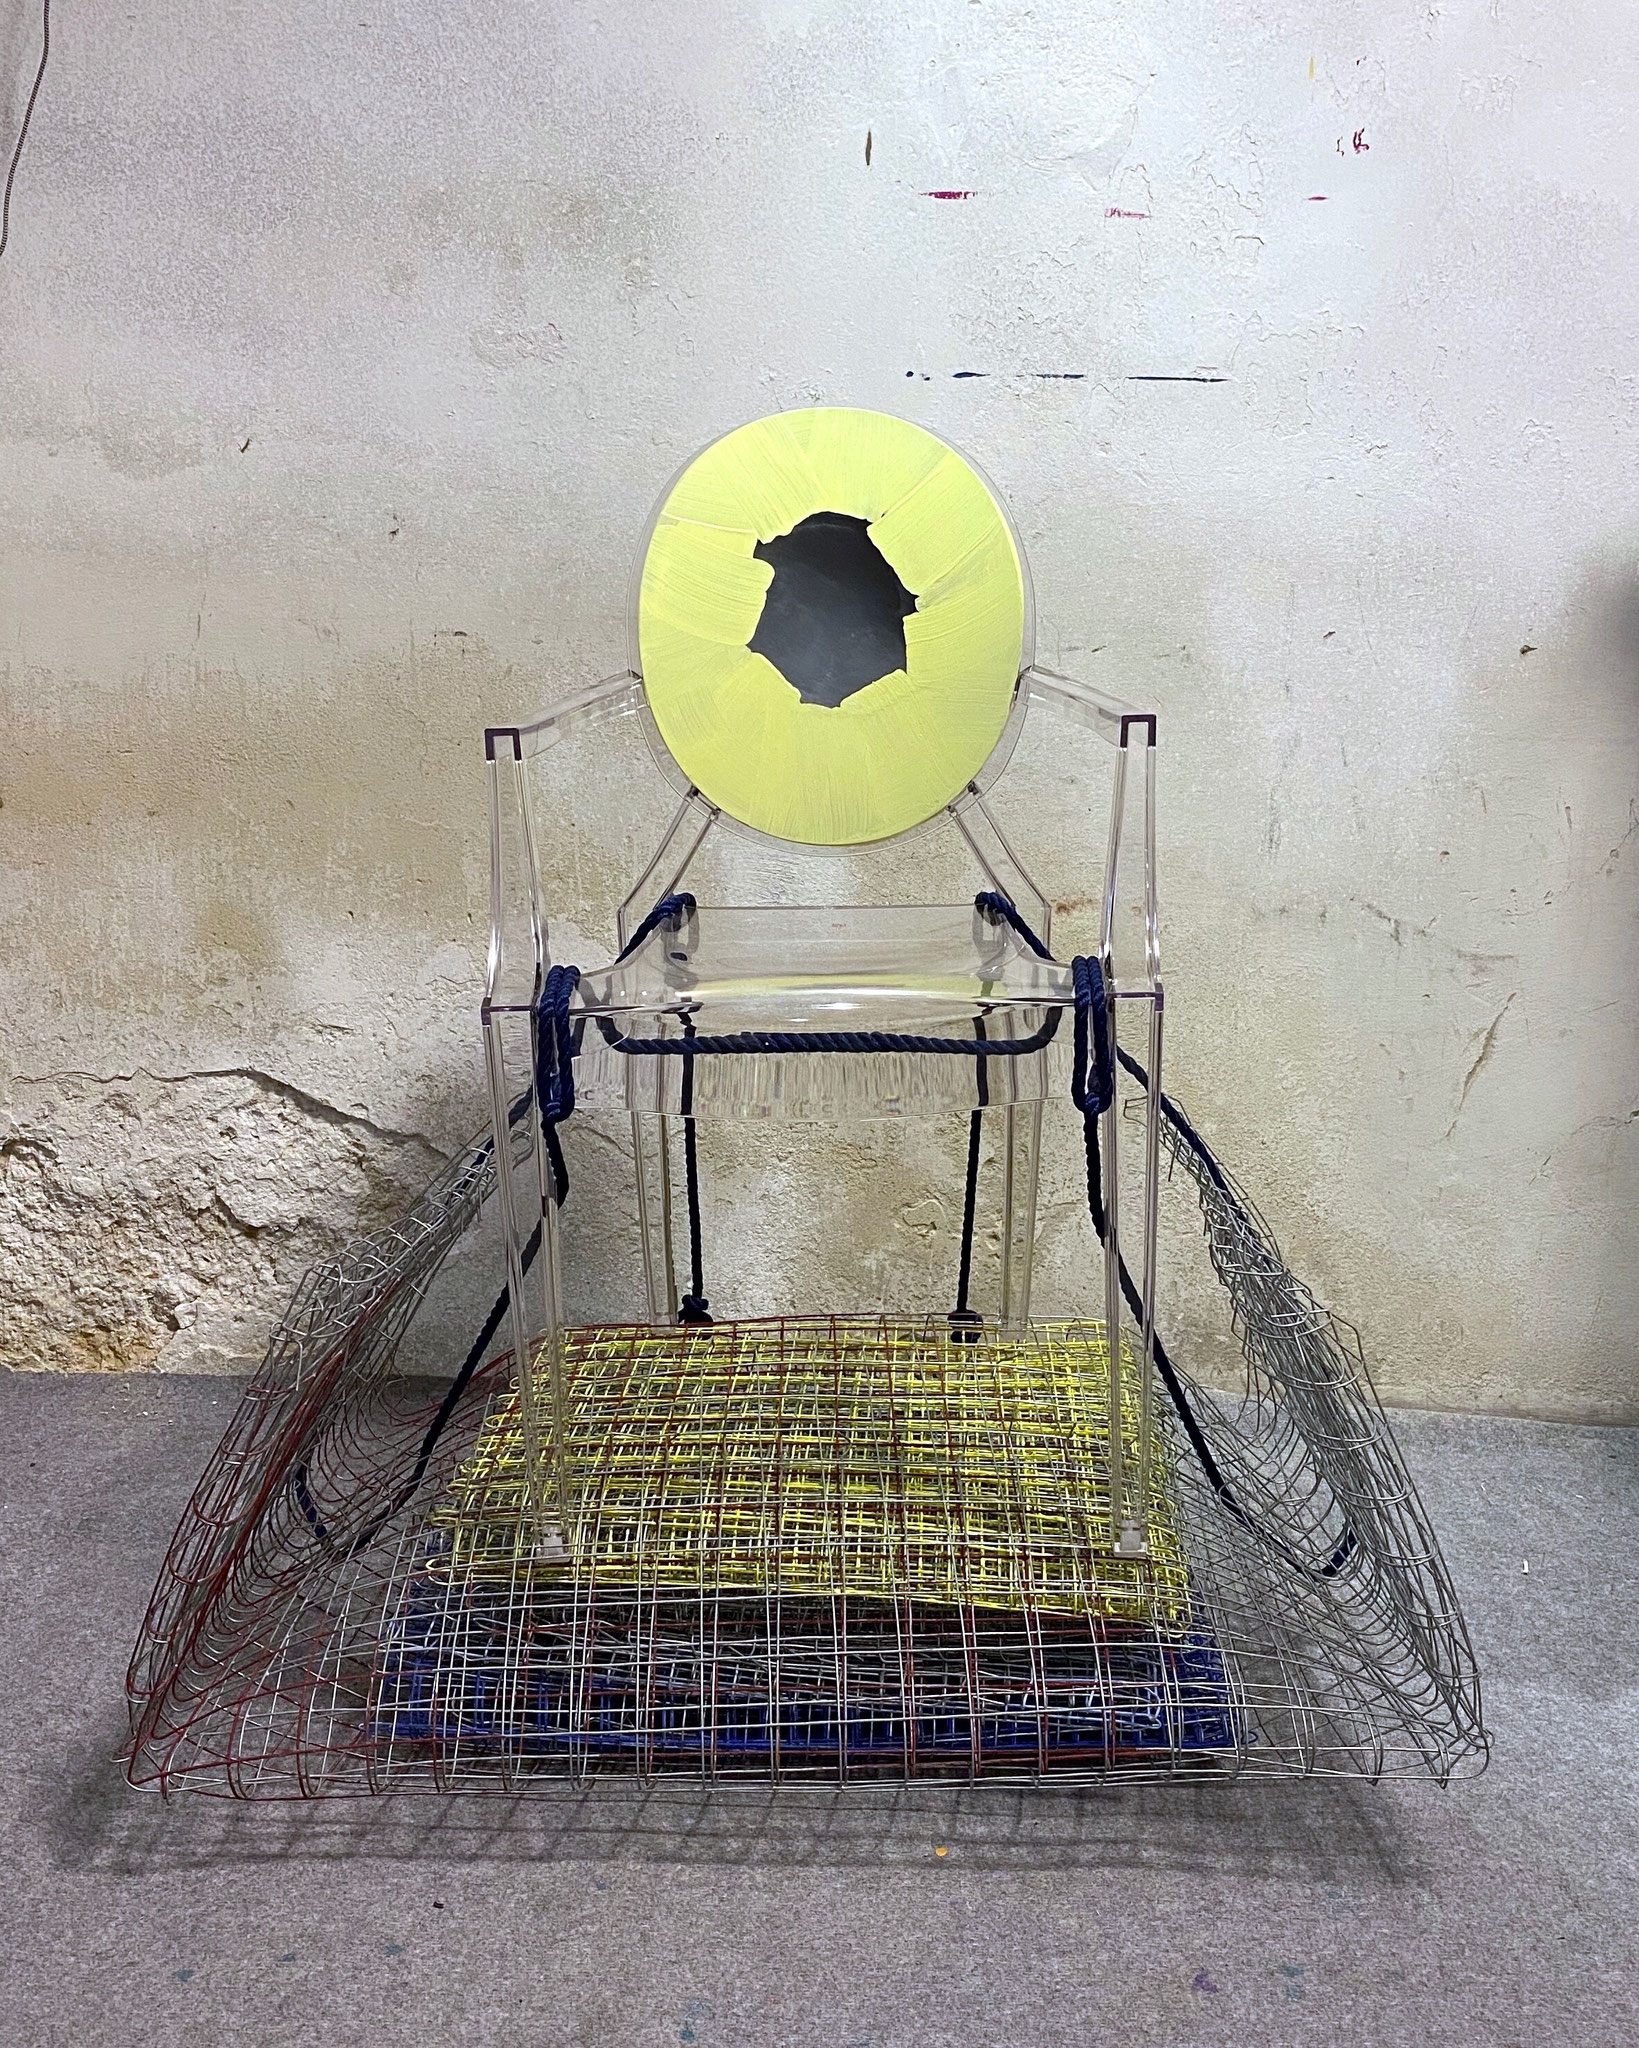 LATTICE THRONE, acrylic on polycarbonate, wire mesh, rope,  120 x 105 x 80 cm, 2020